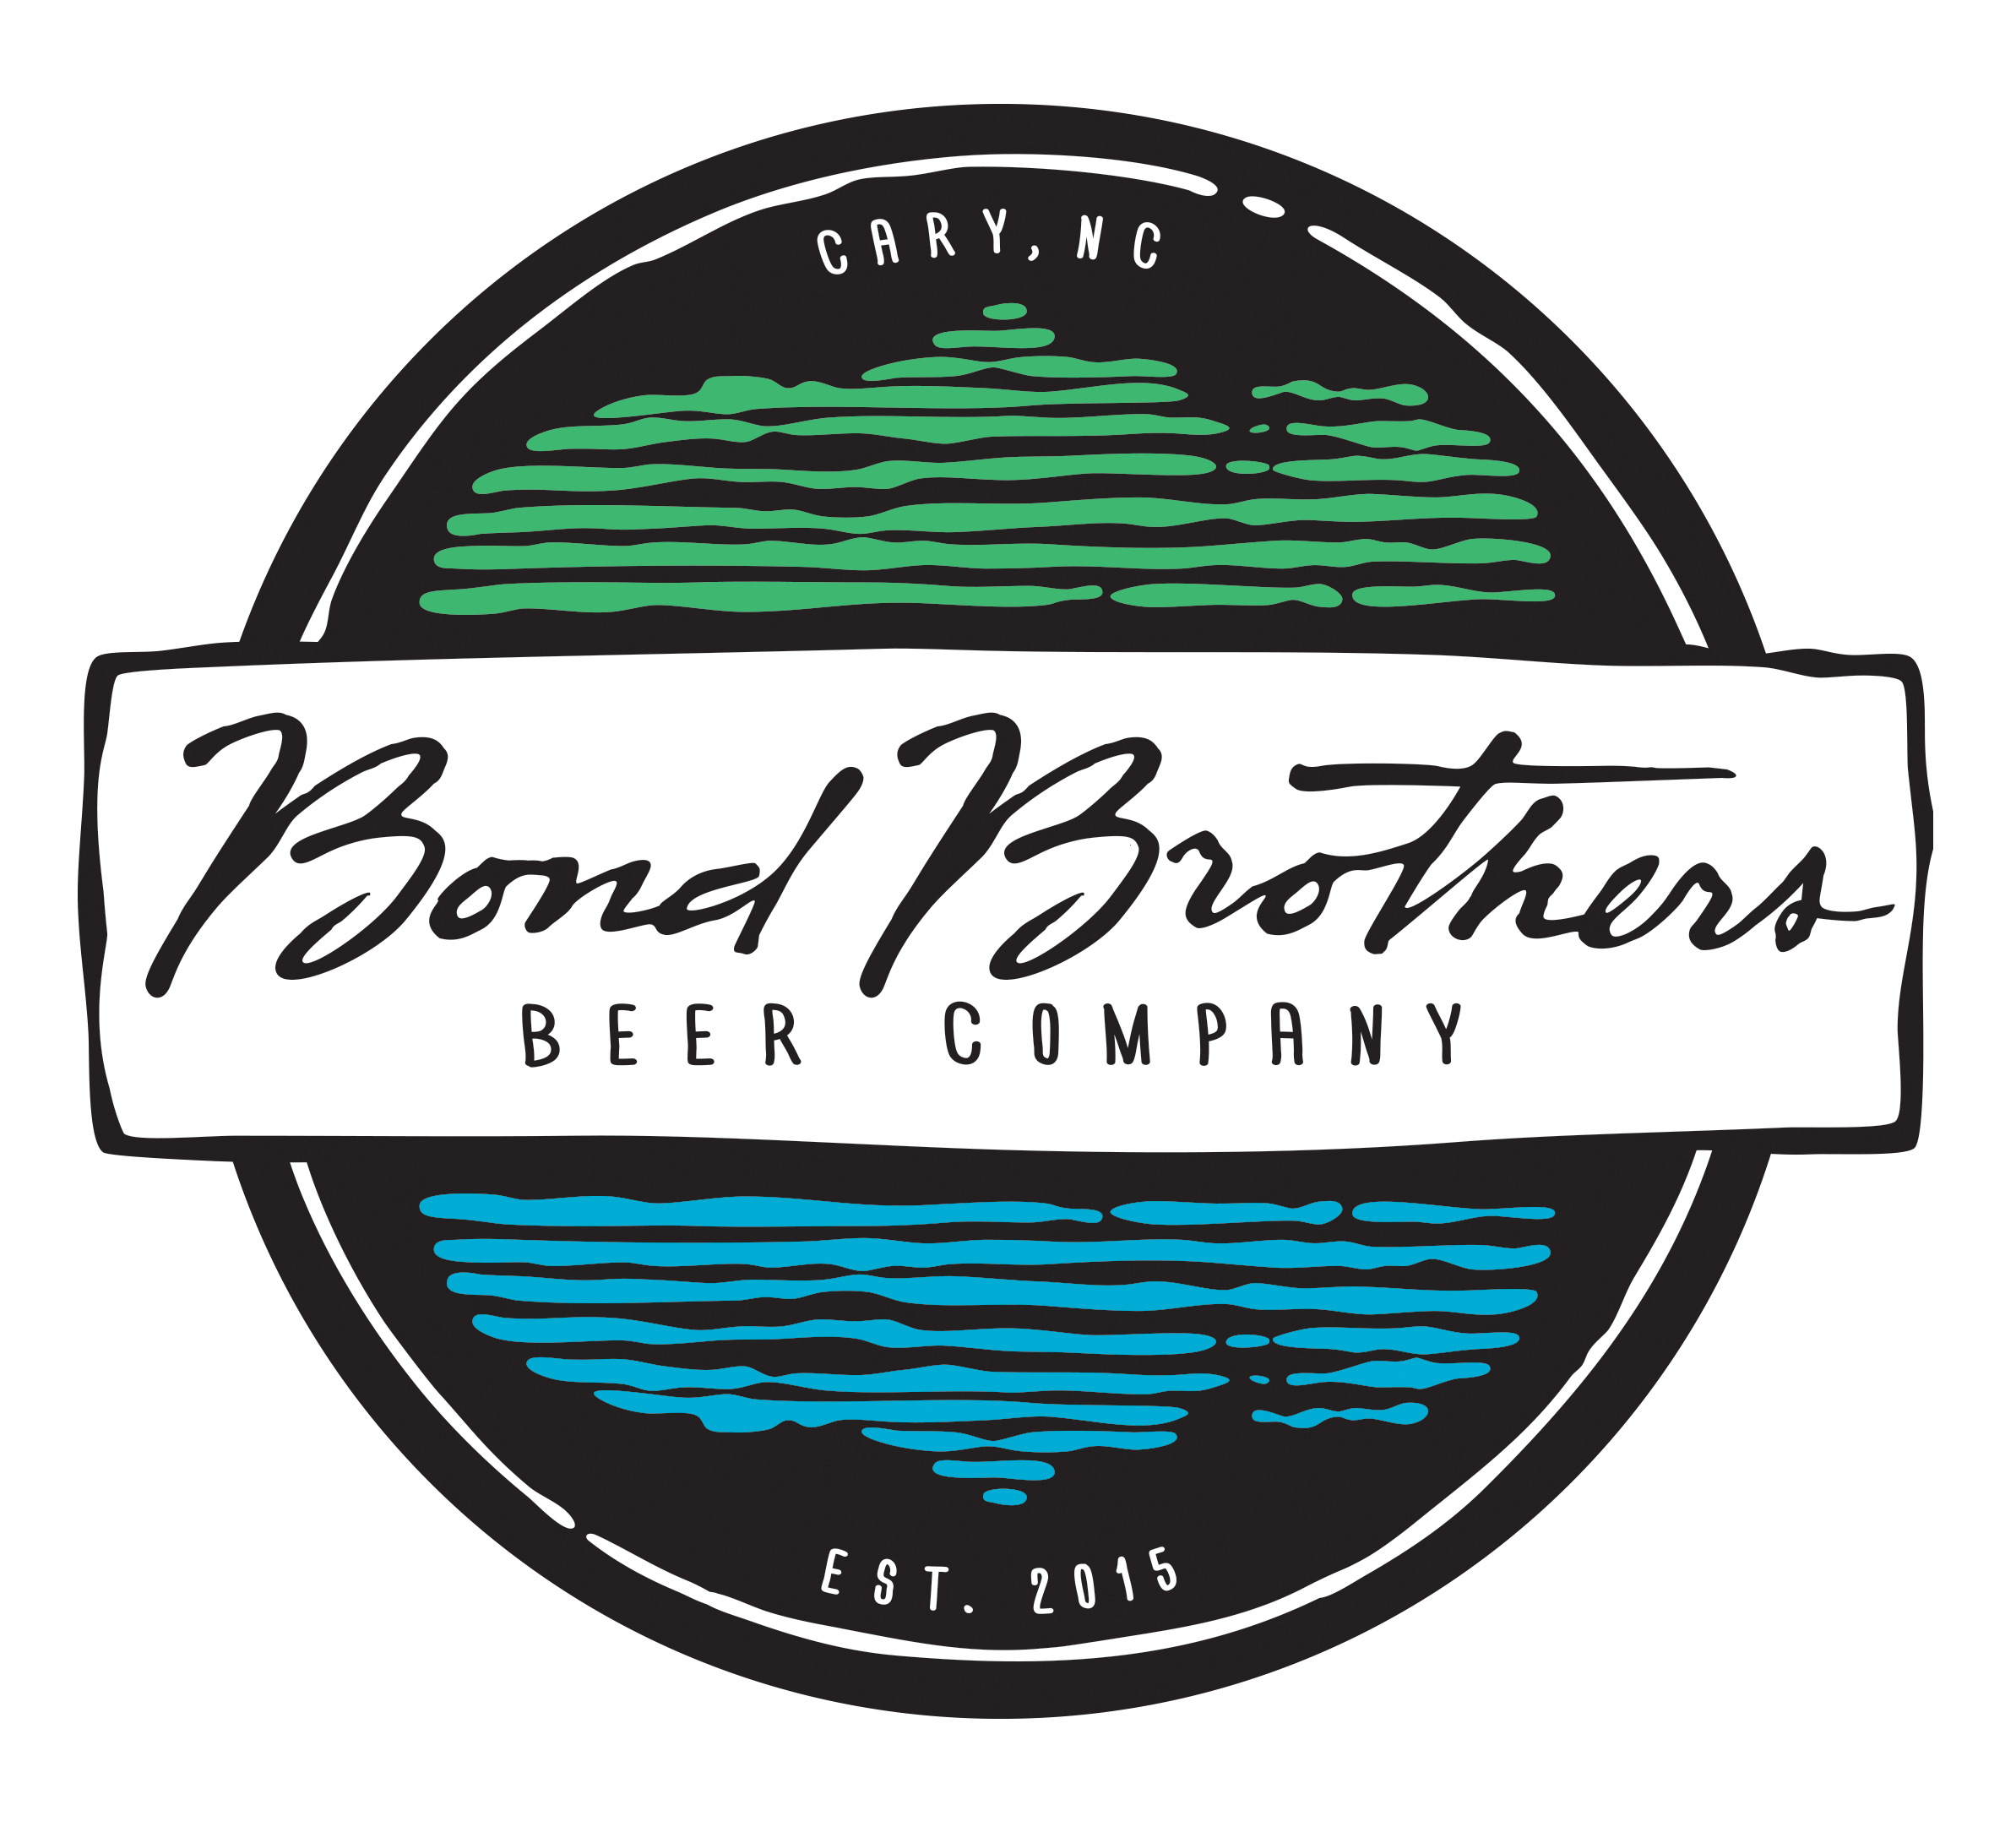 Sponsor Bond Brothers Beer Company